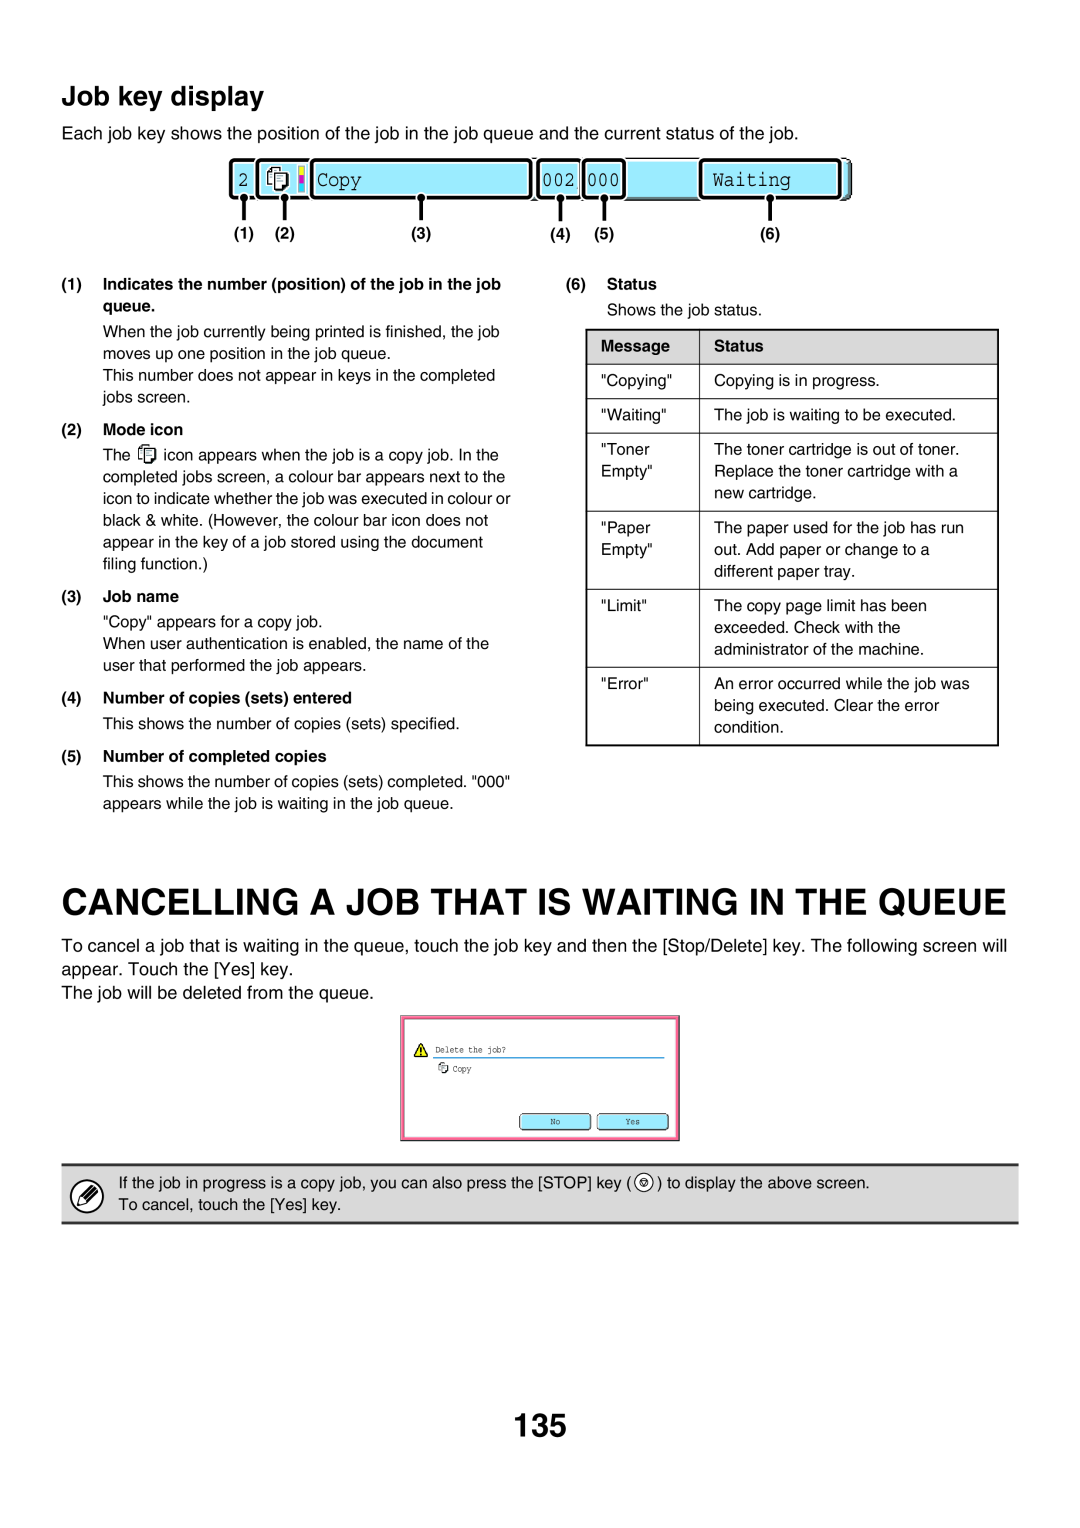 Sharp MX-6200N, MX-7000N, MX-5500N manual Cancelling A Job That Is Waiting In The Queue, Job key display, Copy, 002/000 